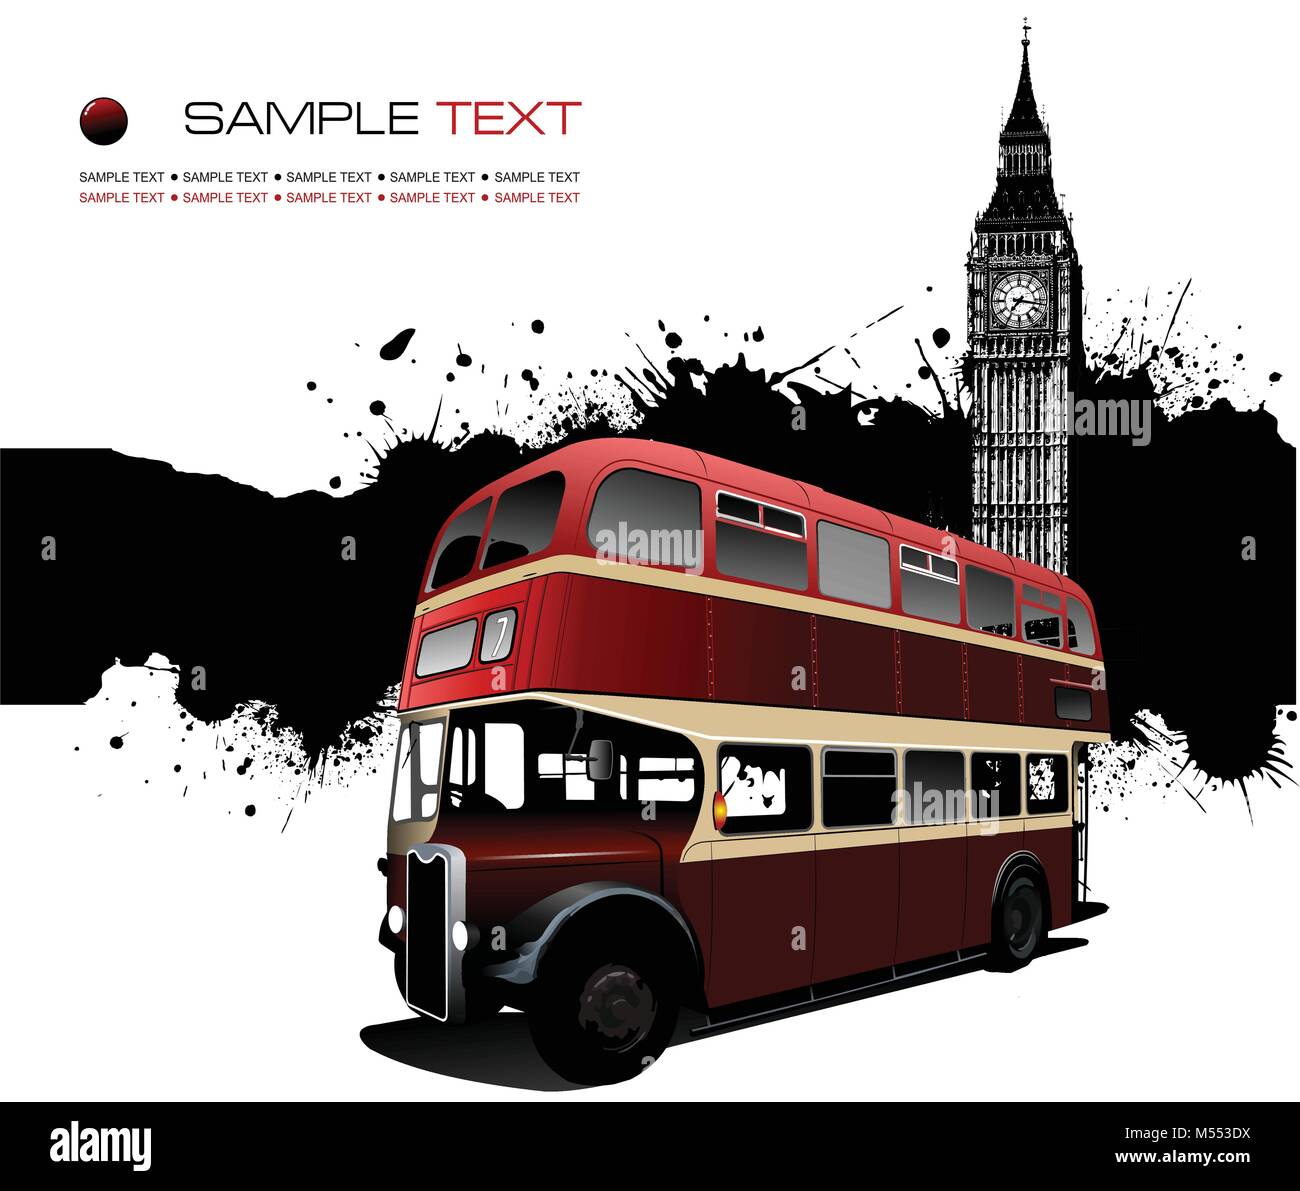 Grunge blot Banner mit London Bilder. Vector Illustration Stock Vektor